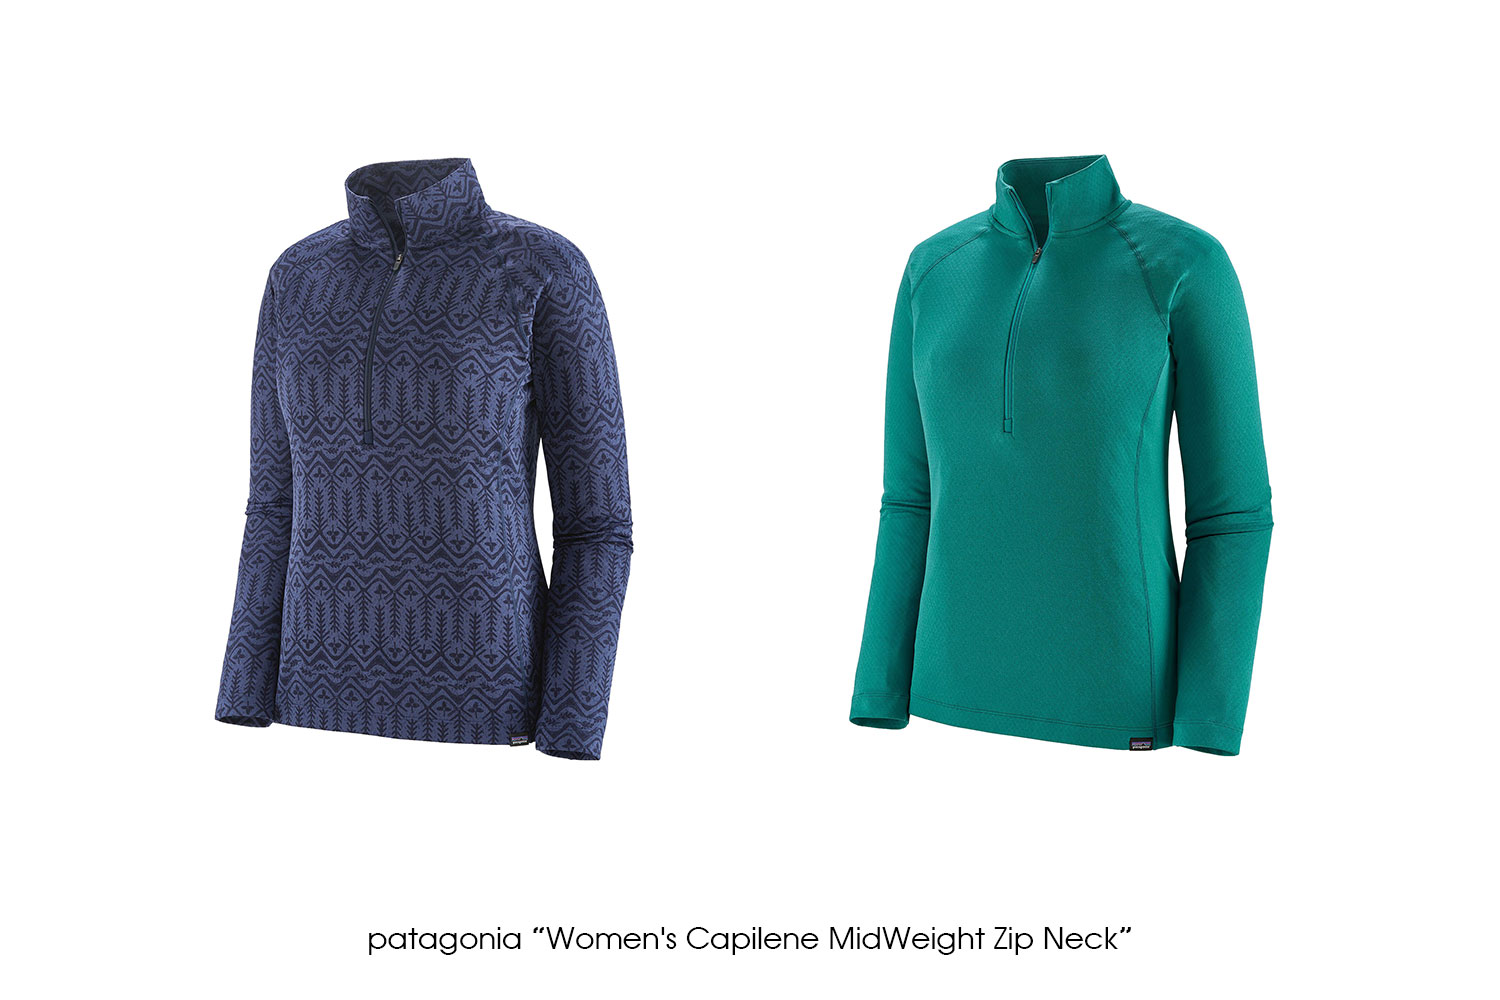 patagonia "Women's Capilene MidWeight Zip Neck"